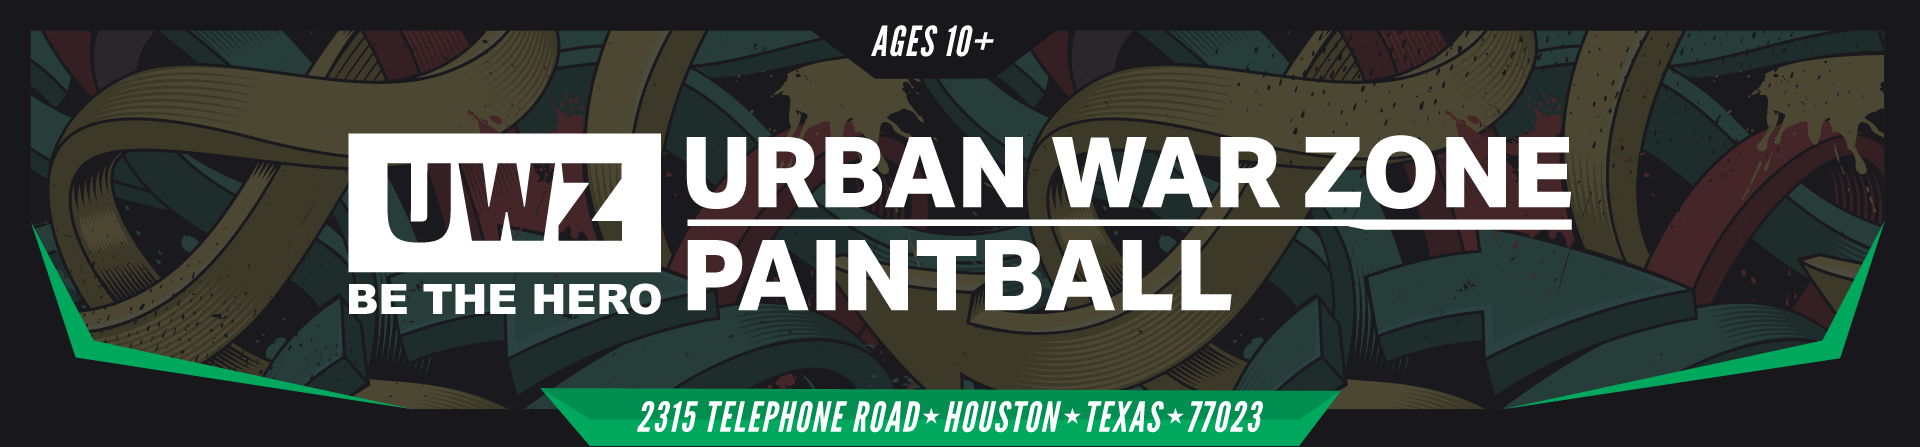 Logo for Urban War Zone Paintball in Houston, Tx